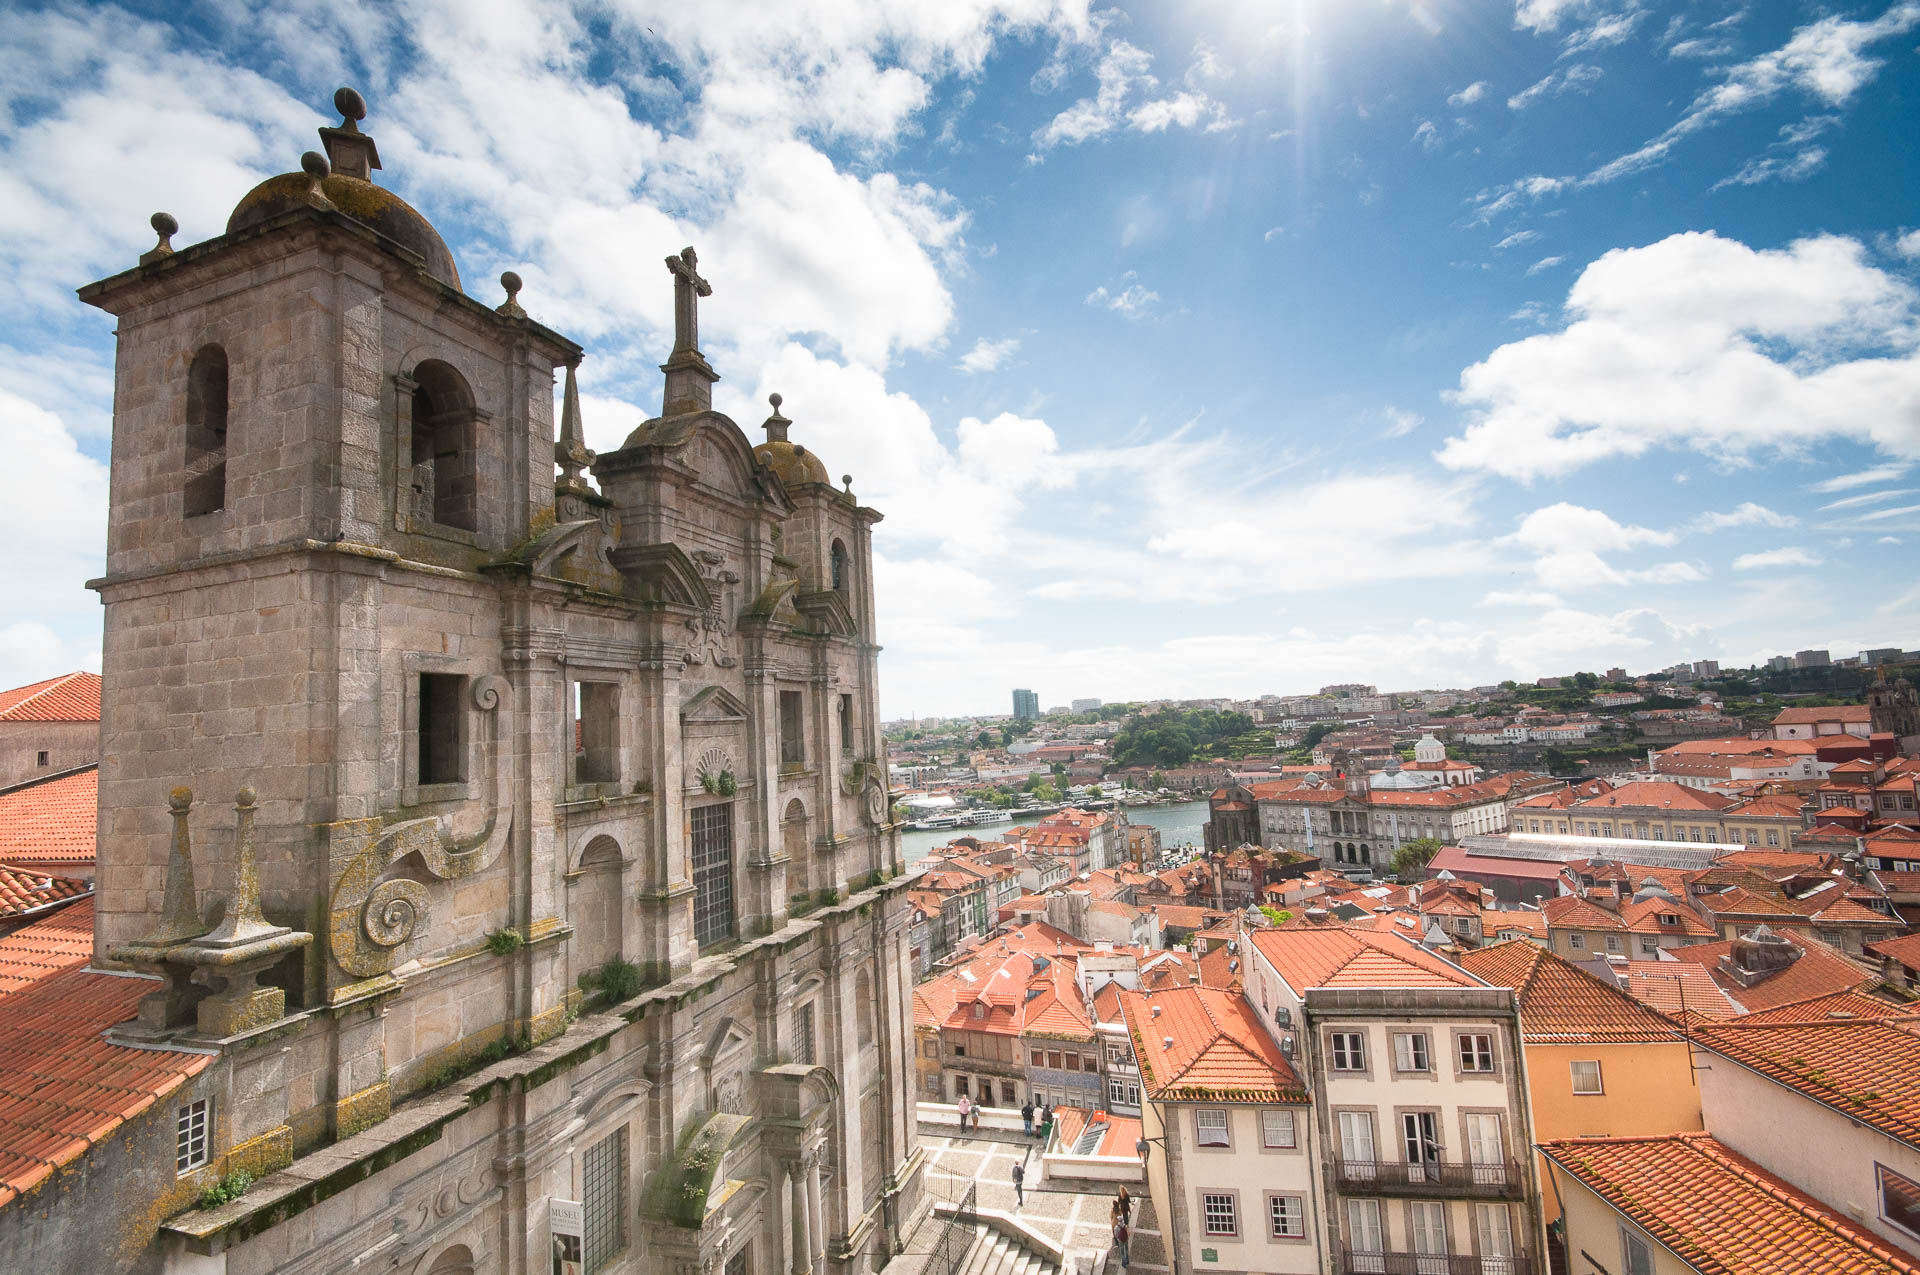 Porto église sao francisco 1 - Les globe blogueurs - blog voyage nature